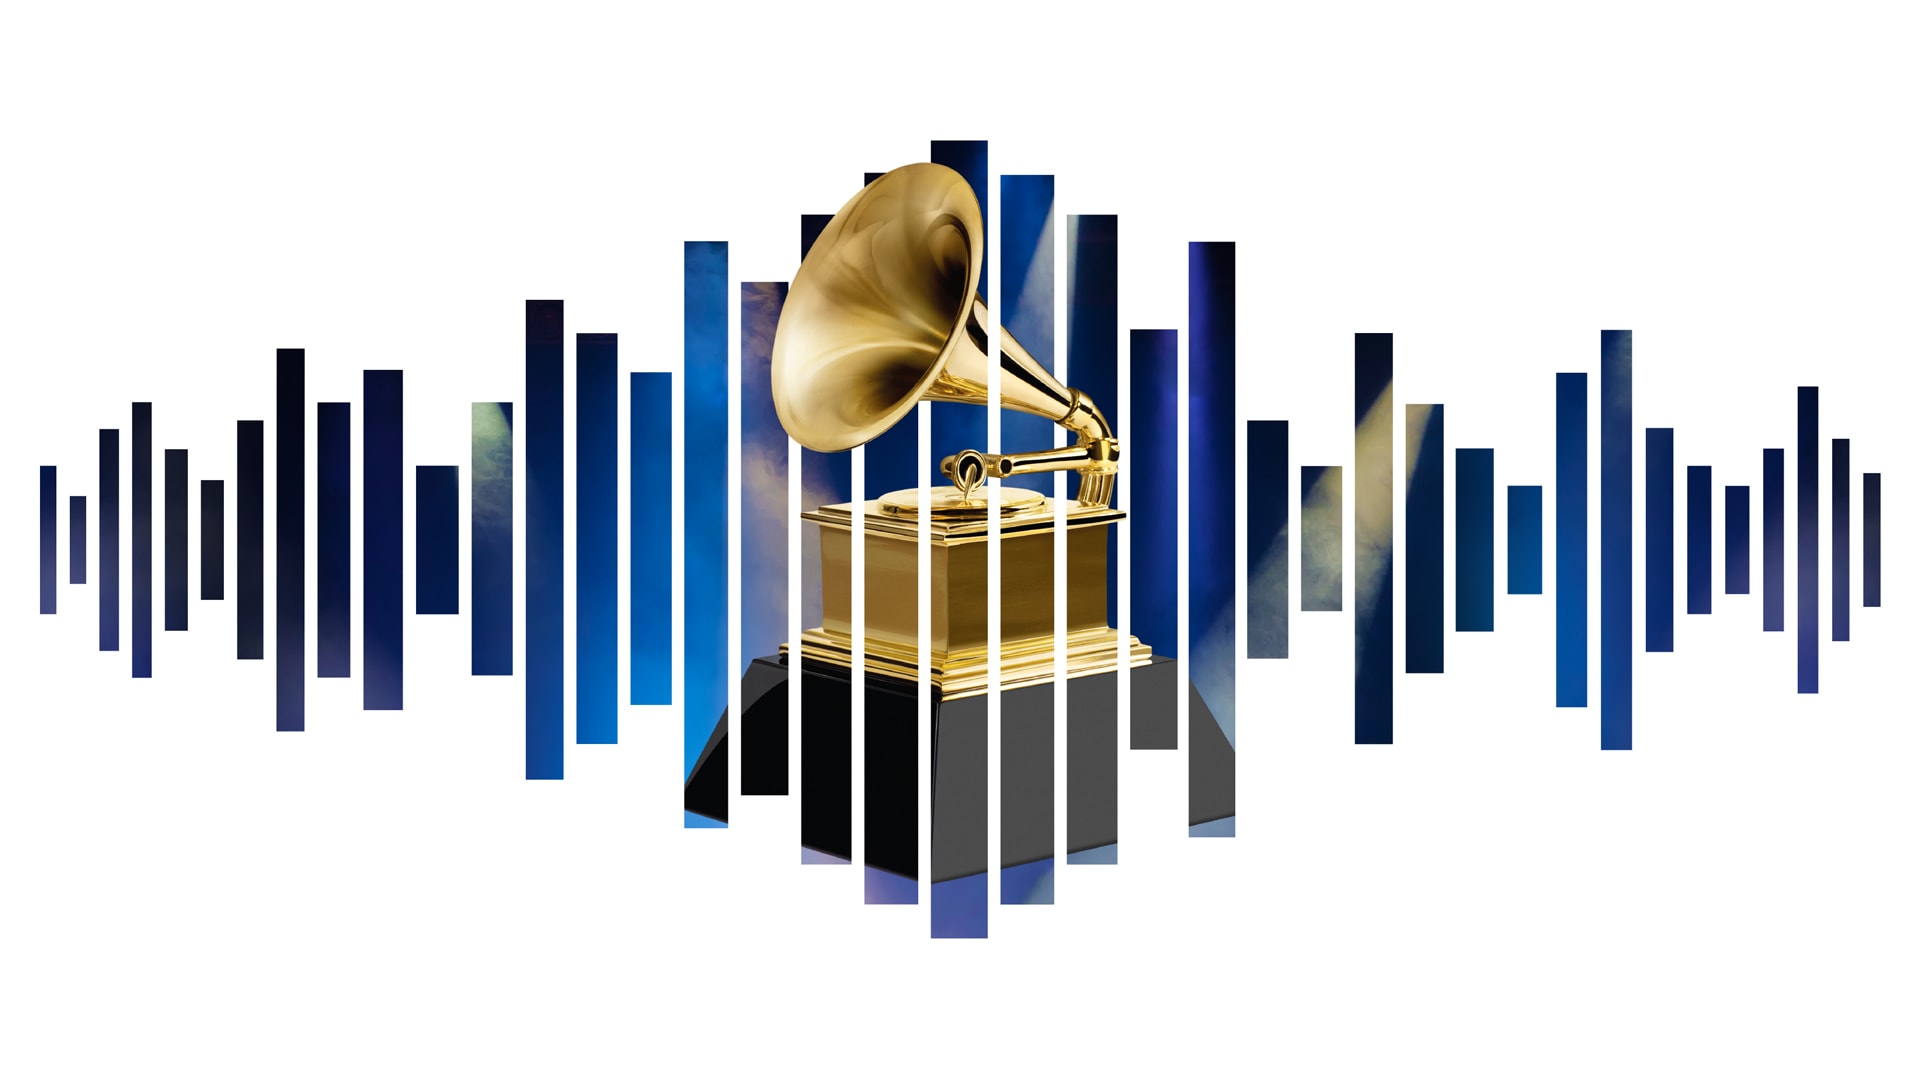 Grammy Awards 2019 highlights: Cardi B makes history, Drake gets cut off, #GrammysNotSoMale